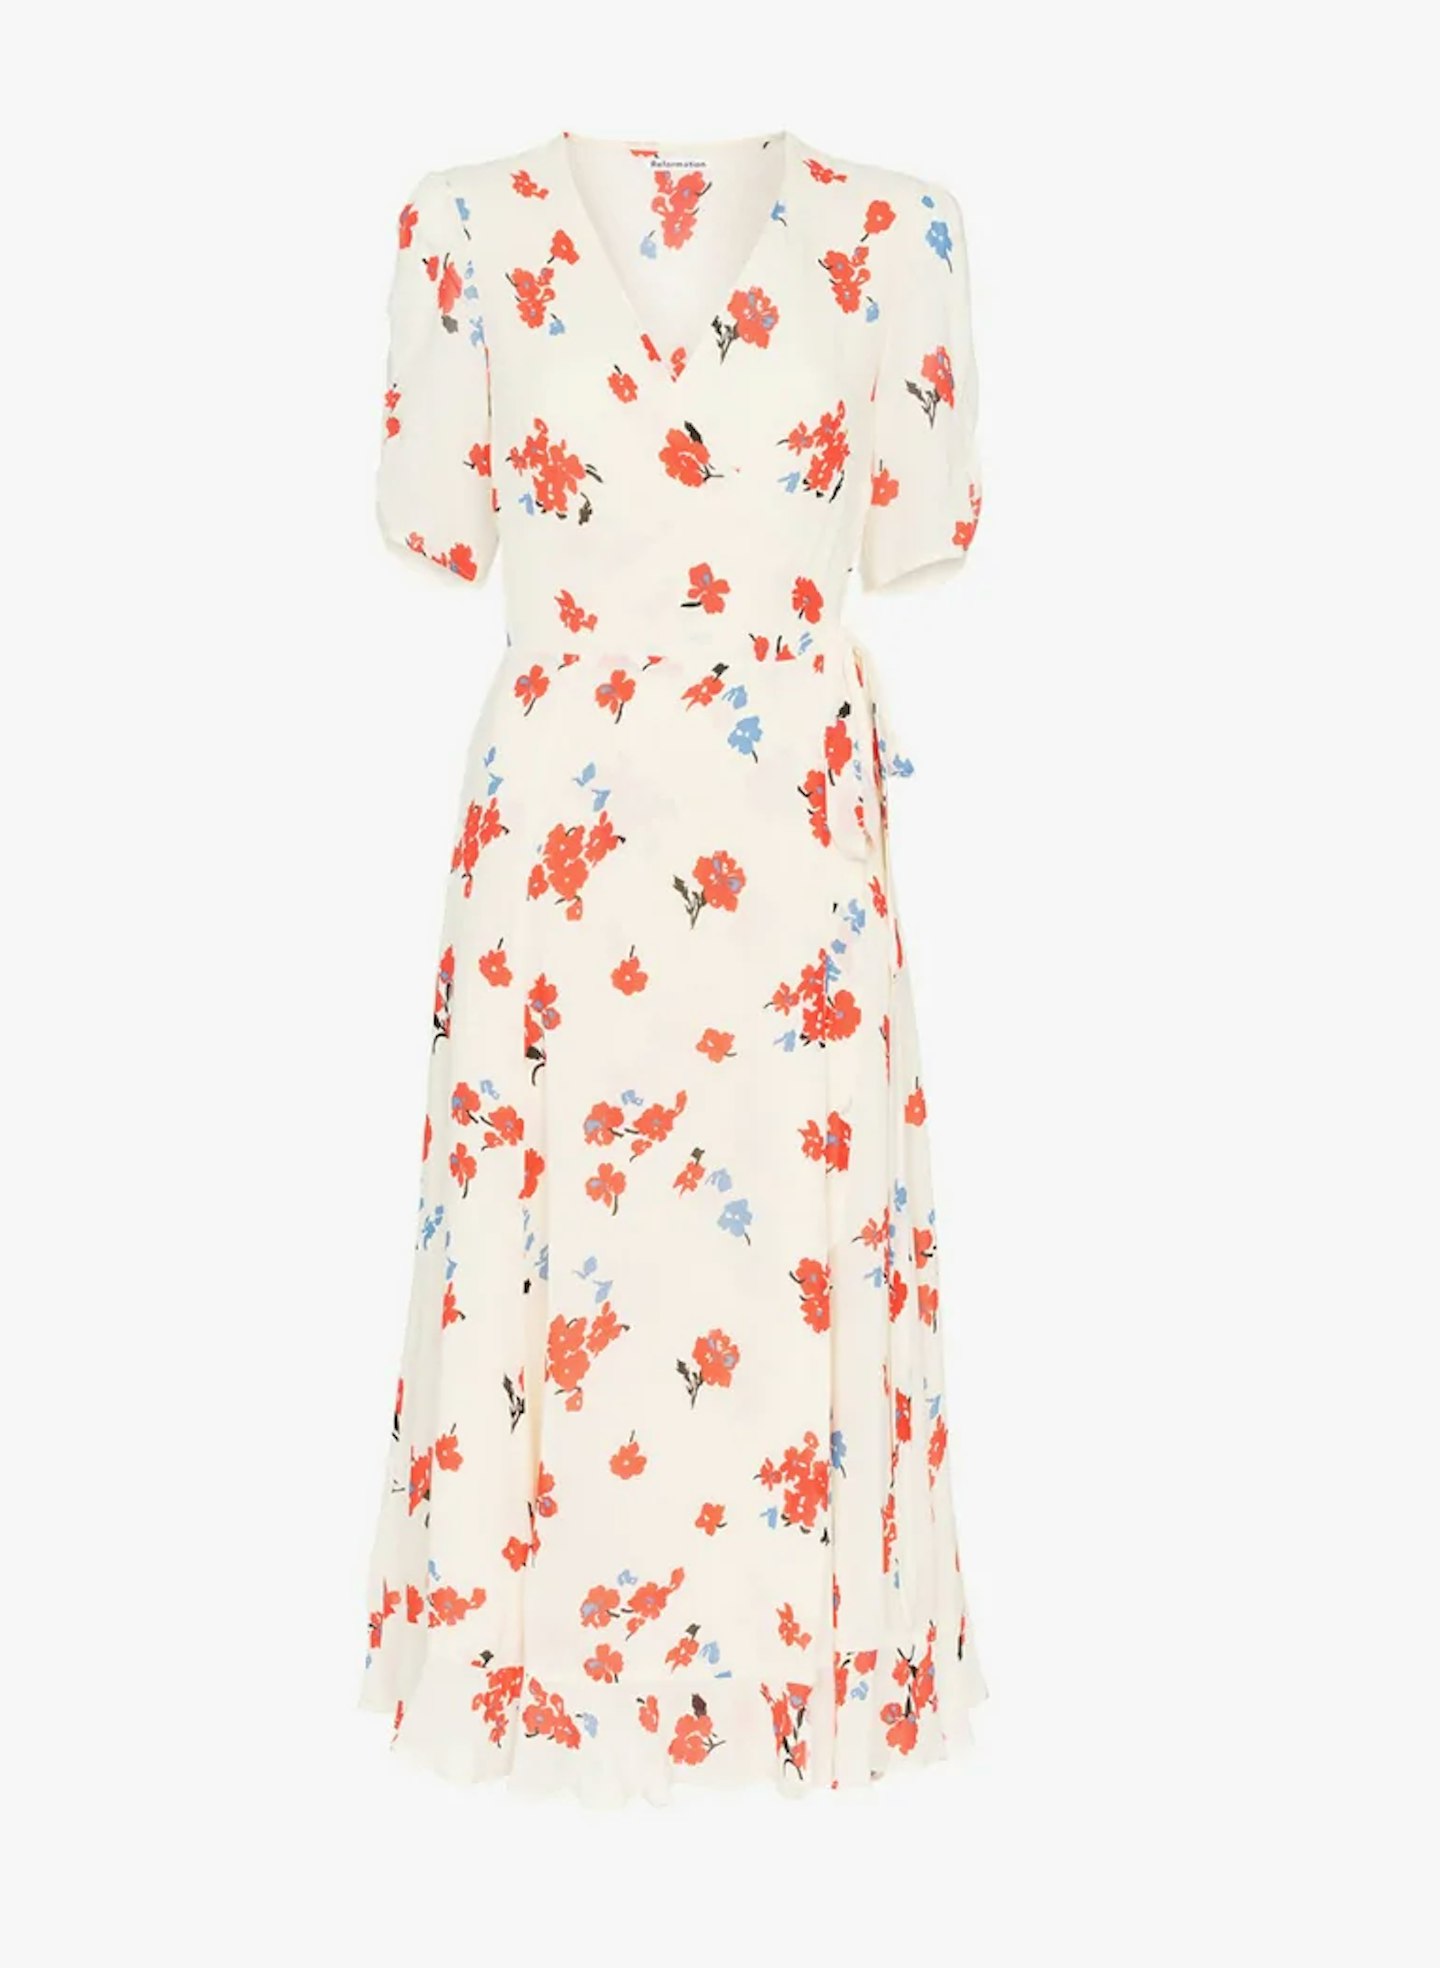 Reformation, Floral Wrap Dress, £205